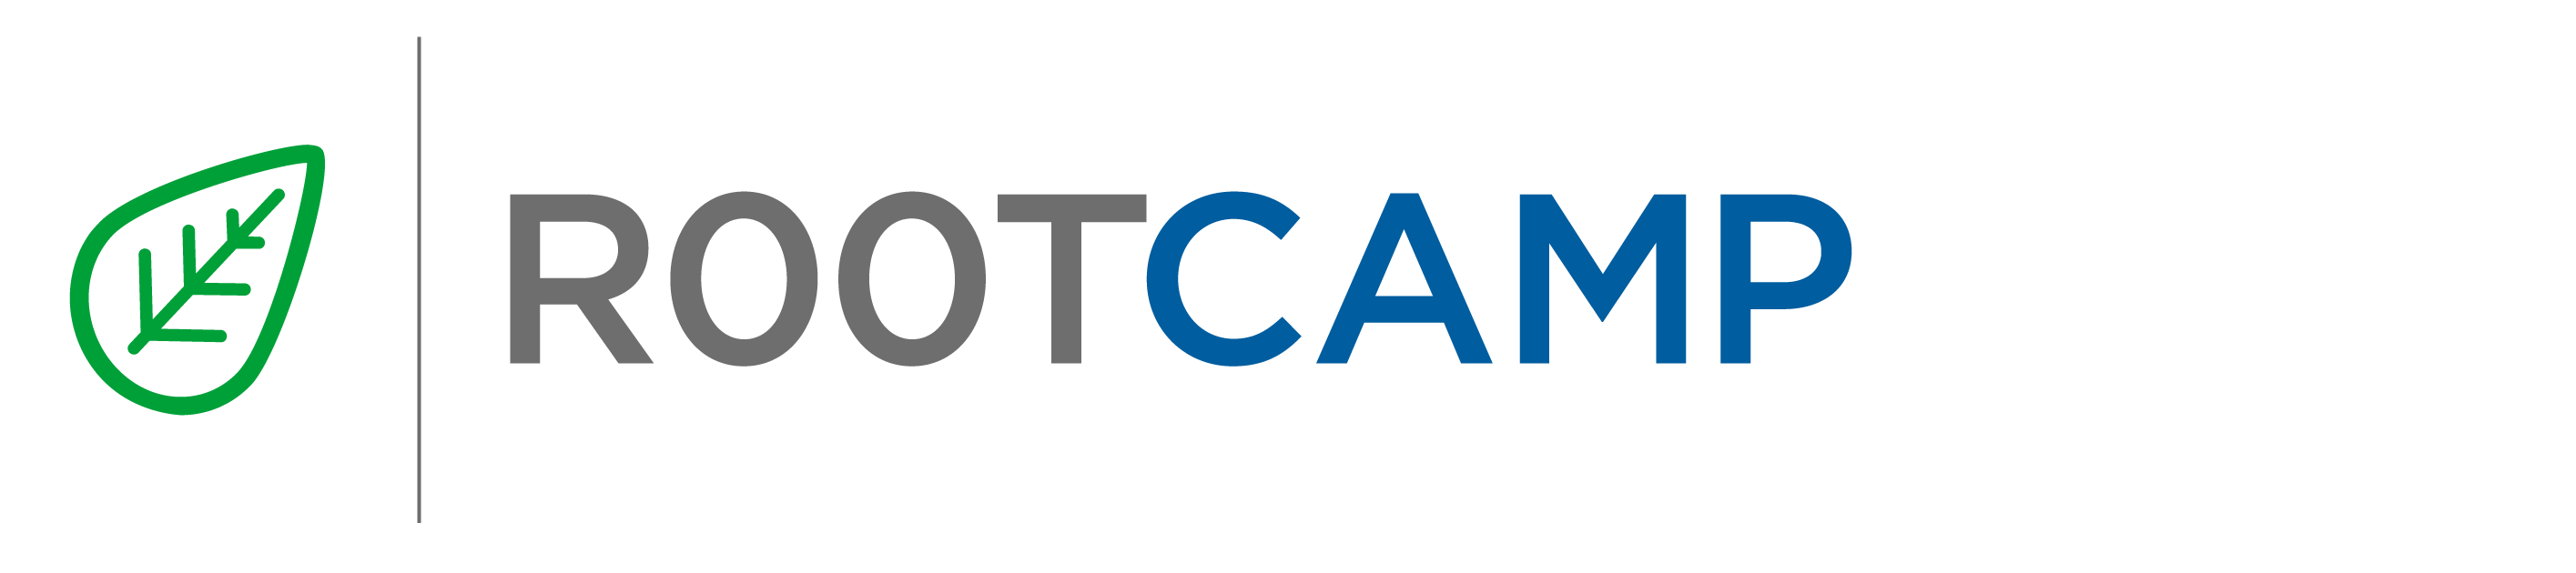 rootcamp logo